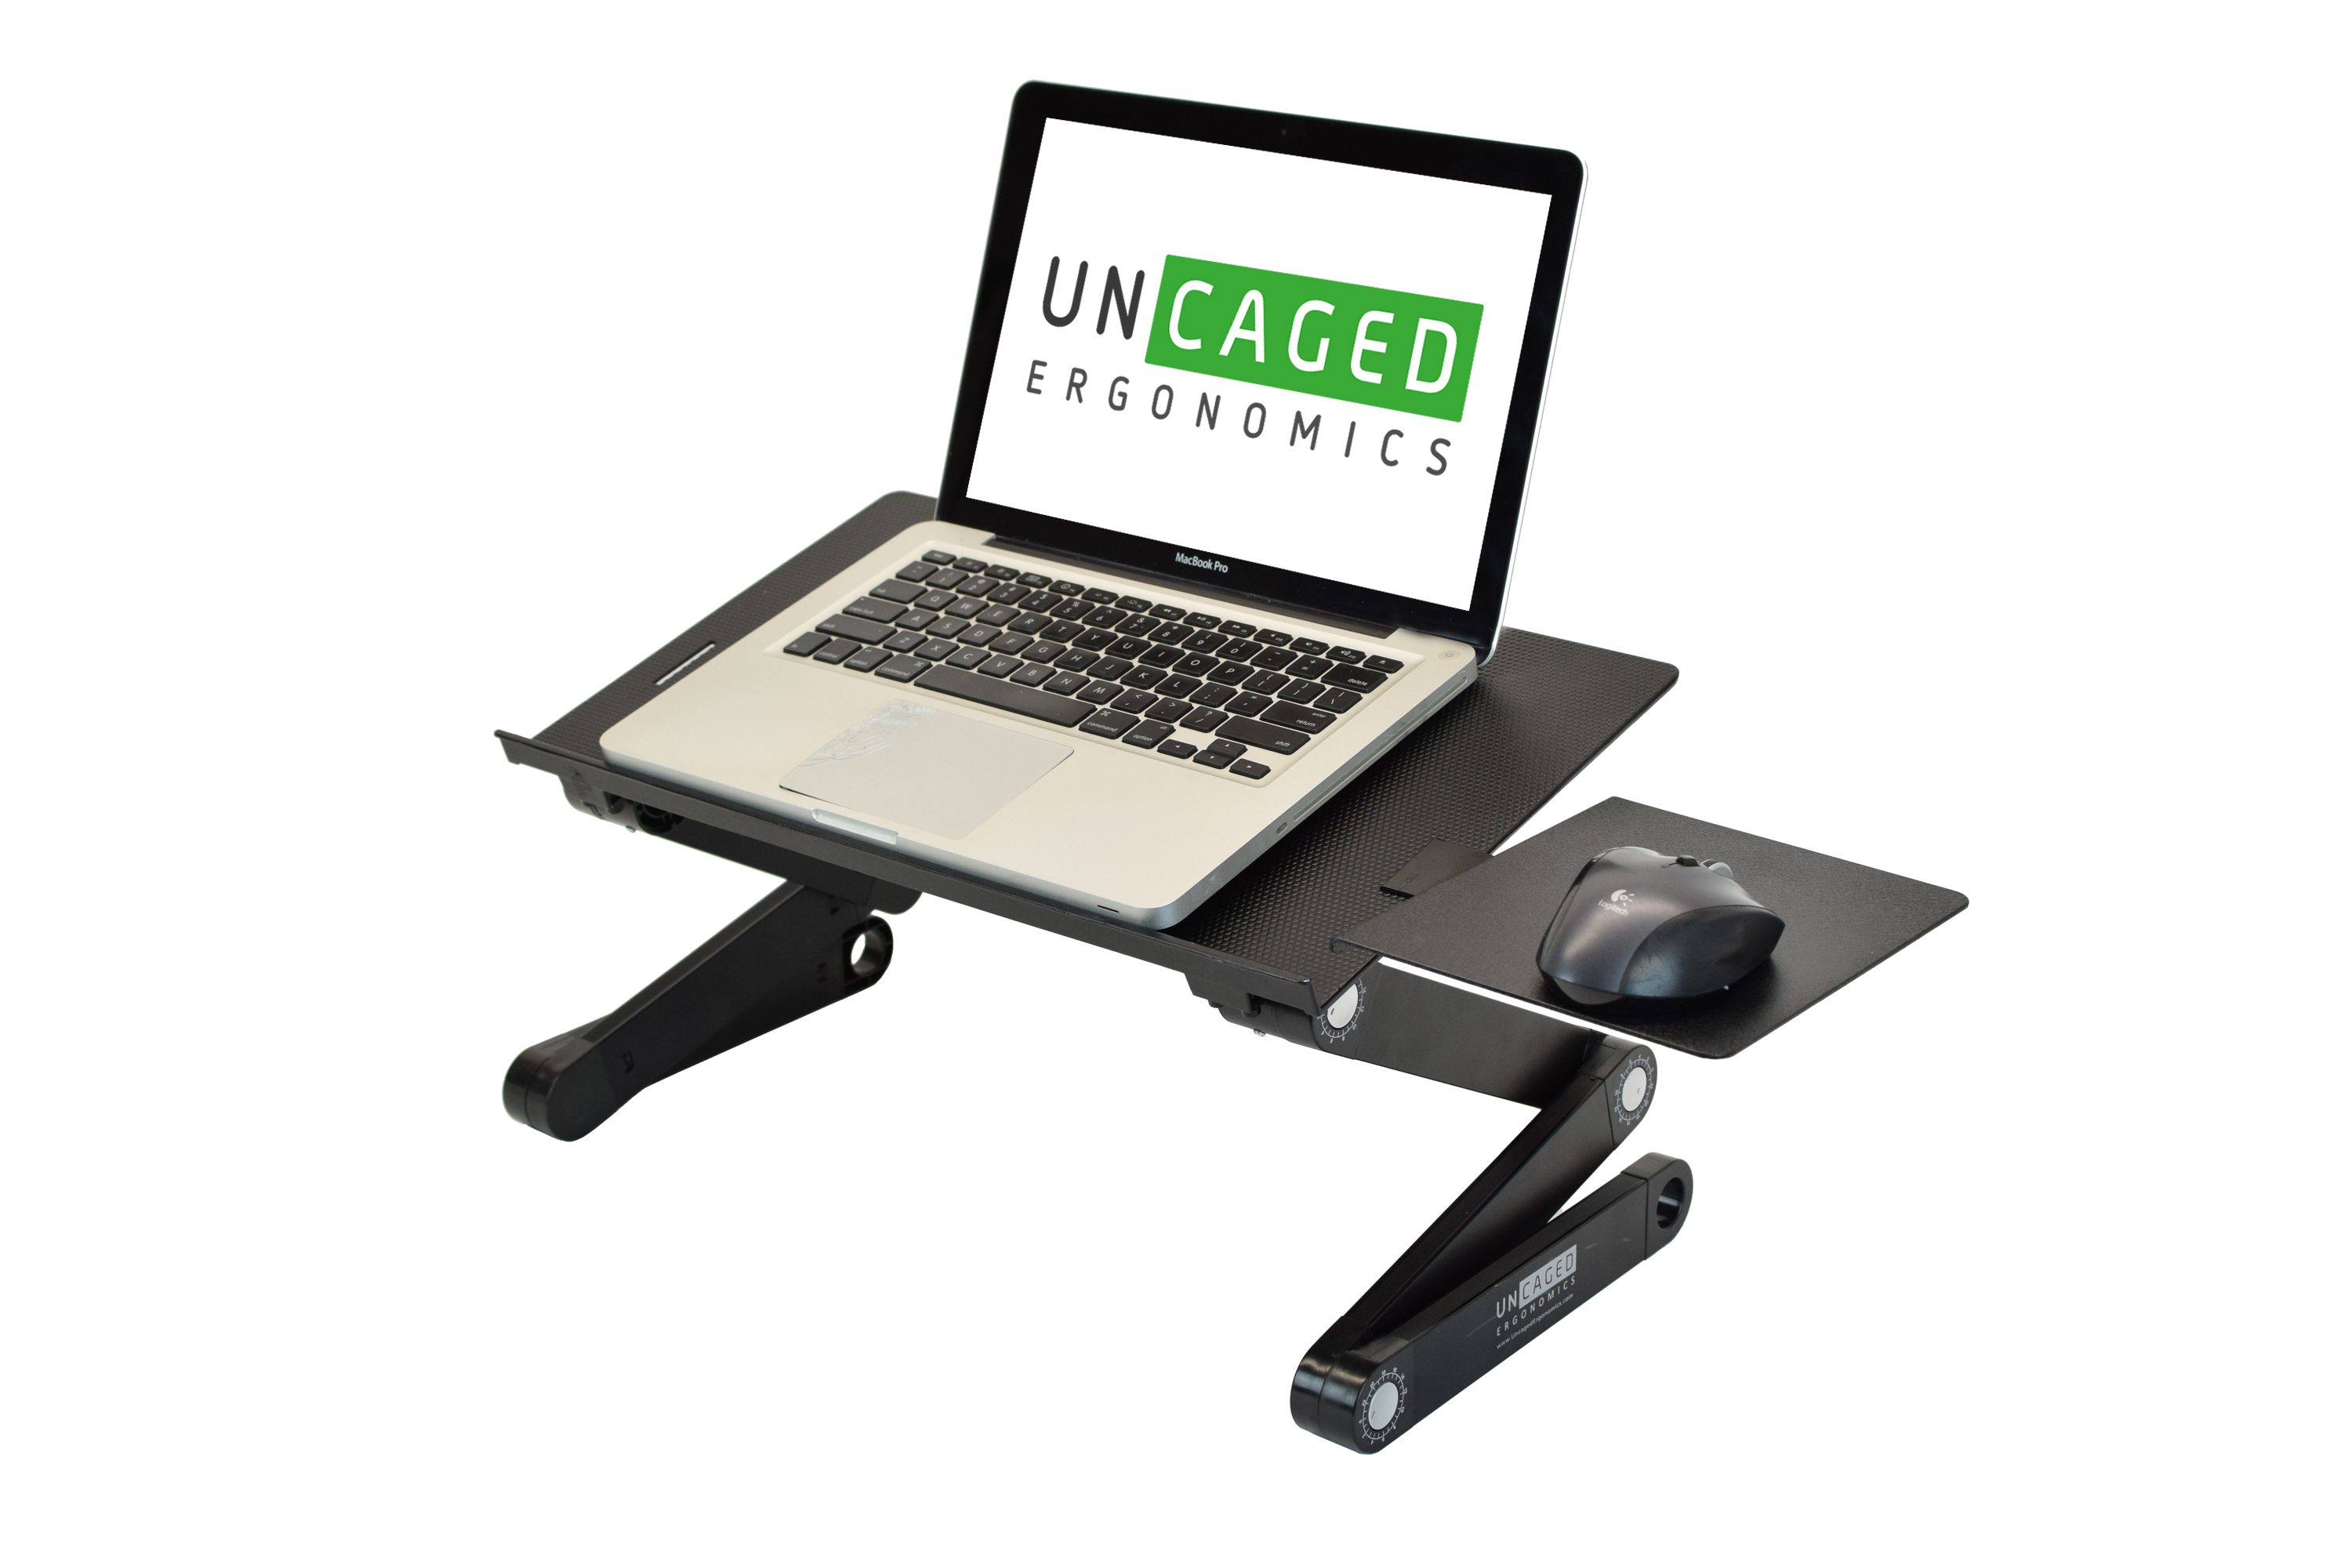 24 Premium Laptop Lap Desk And Riser With Comfort Edge, Mousepad, And  Accessory Slot - Black / Black